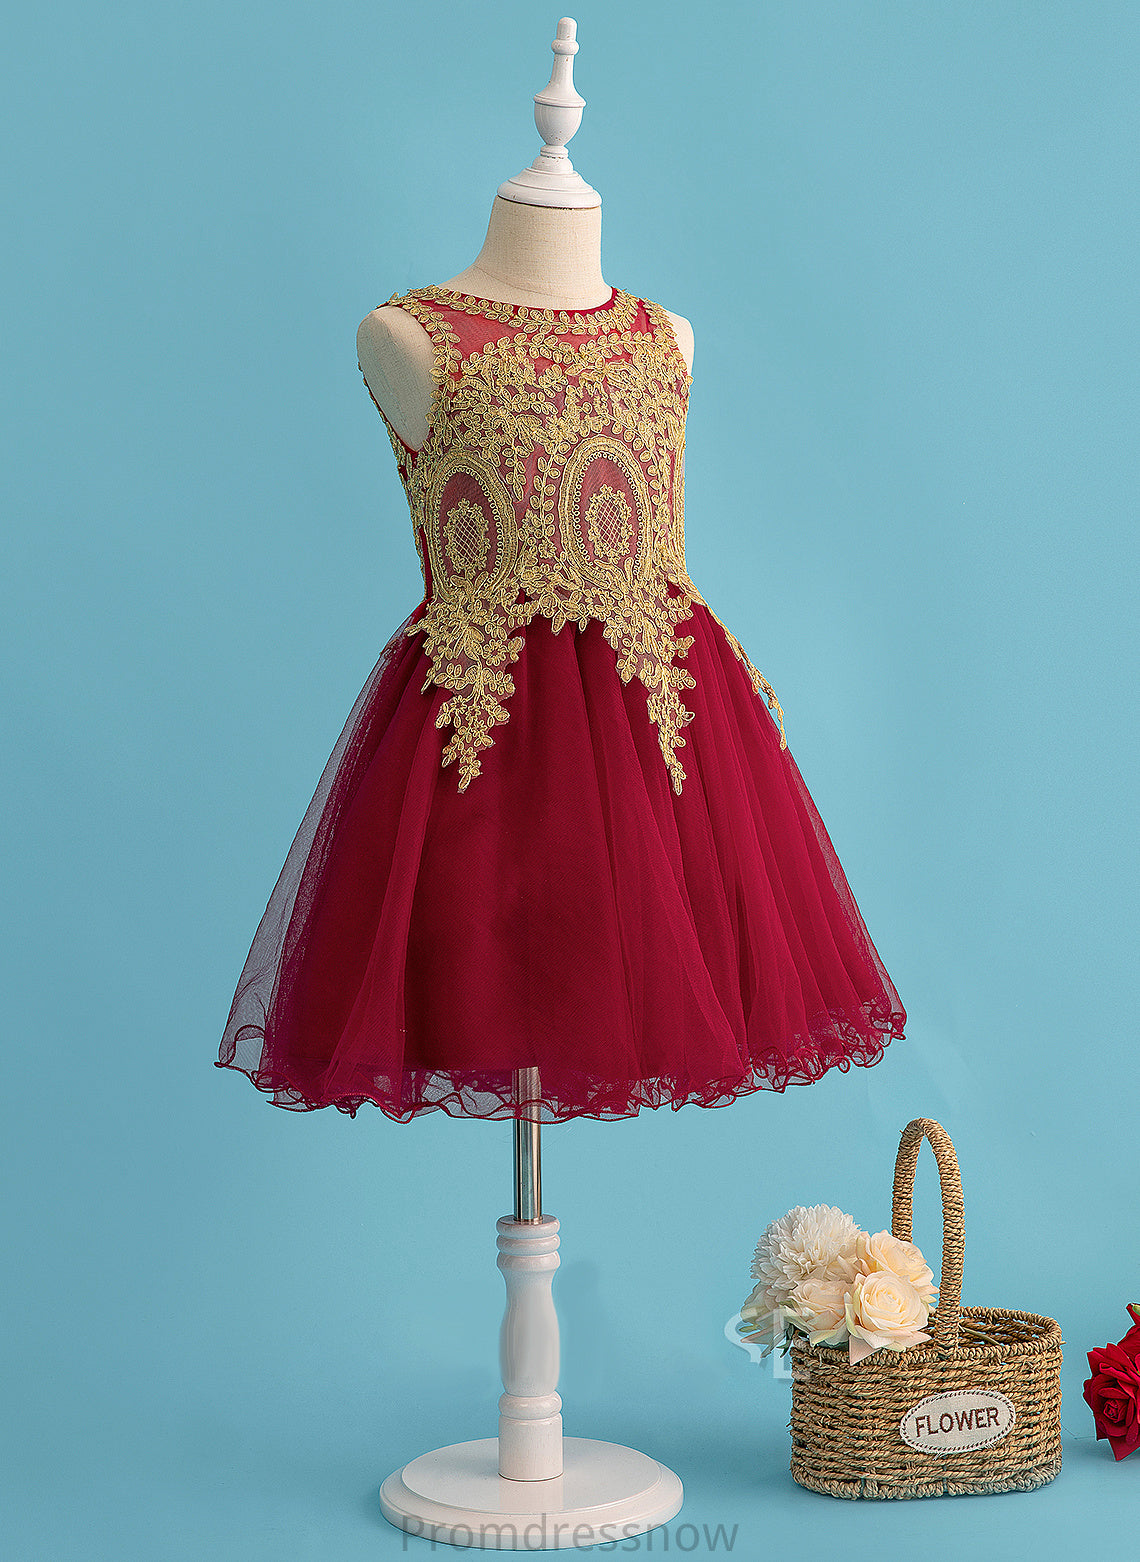 - Bridget Flower Tulle A-Line Sleeveless With Scoop Girl Knee-length Lace Flower Girl Dresses Dress Neck